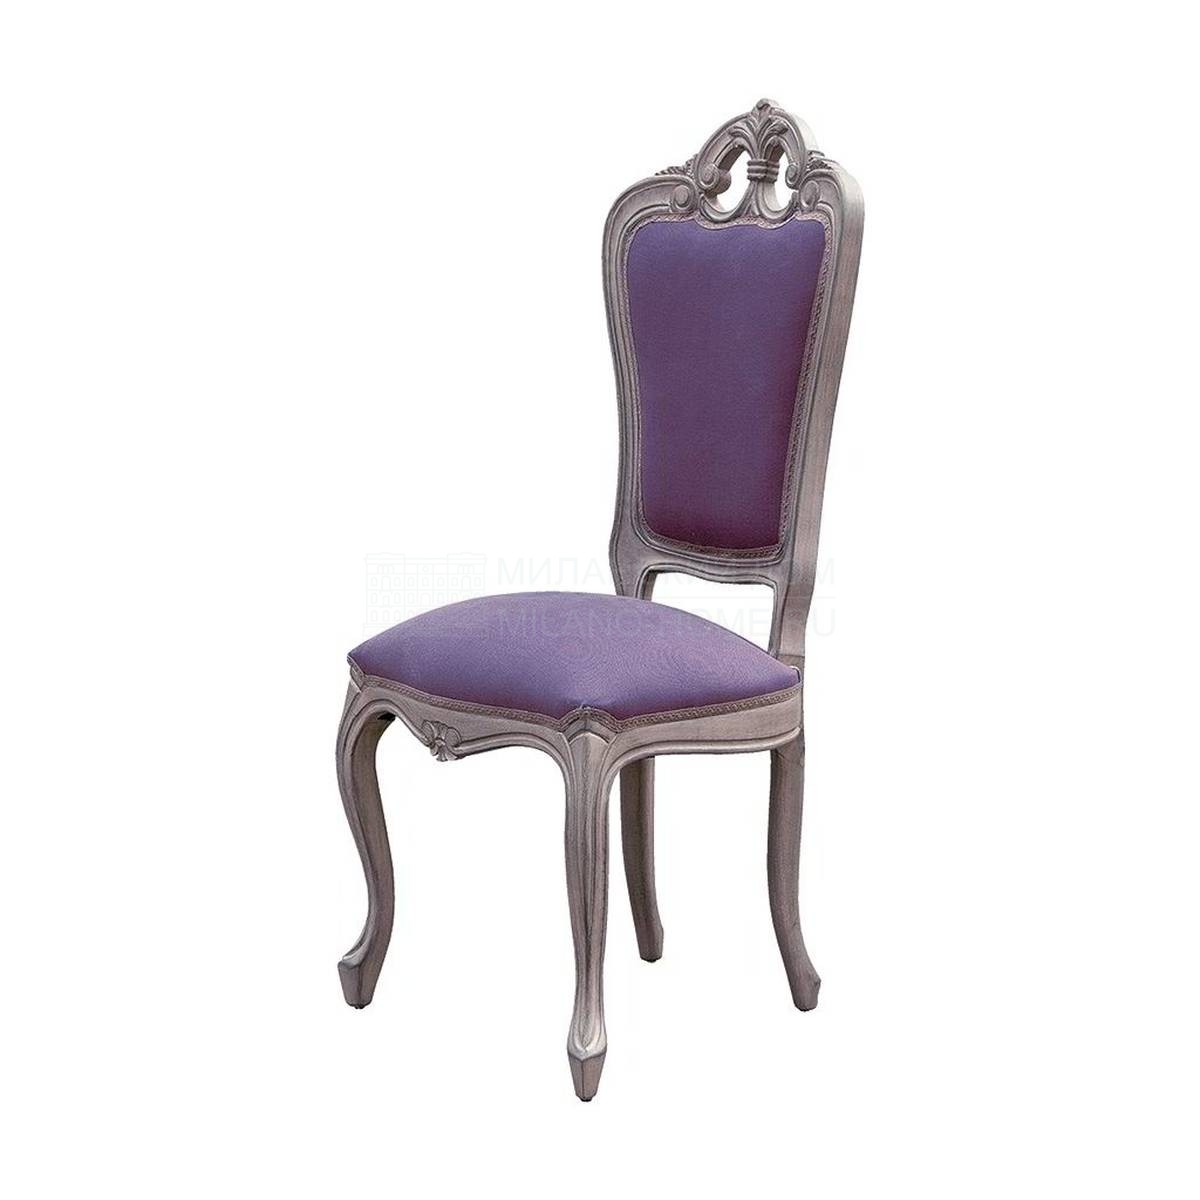 Кожаный стул M-3379 chair из Испании фабрики GUADARTE